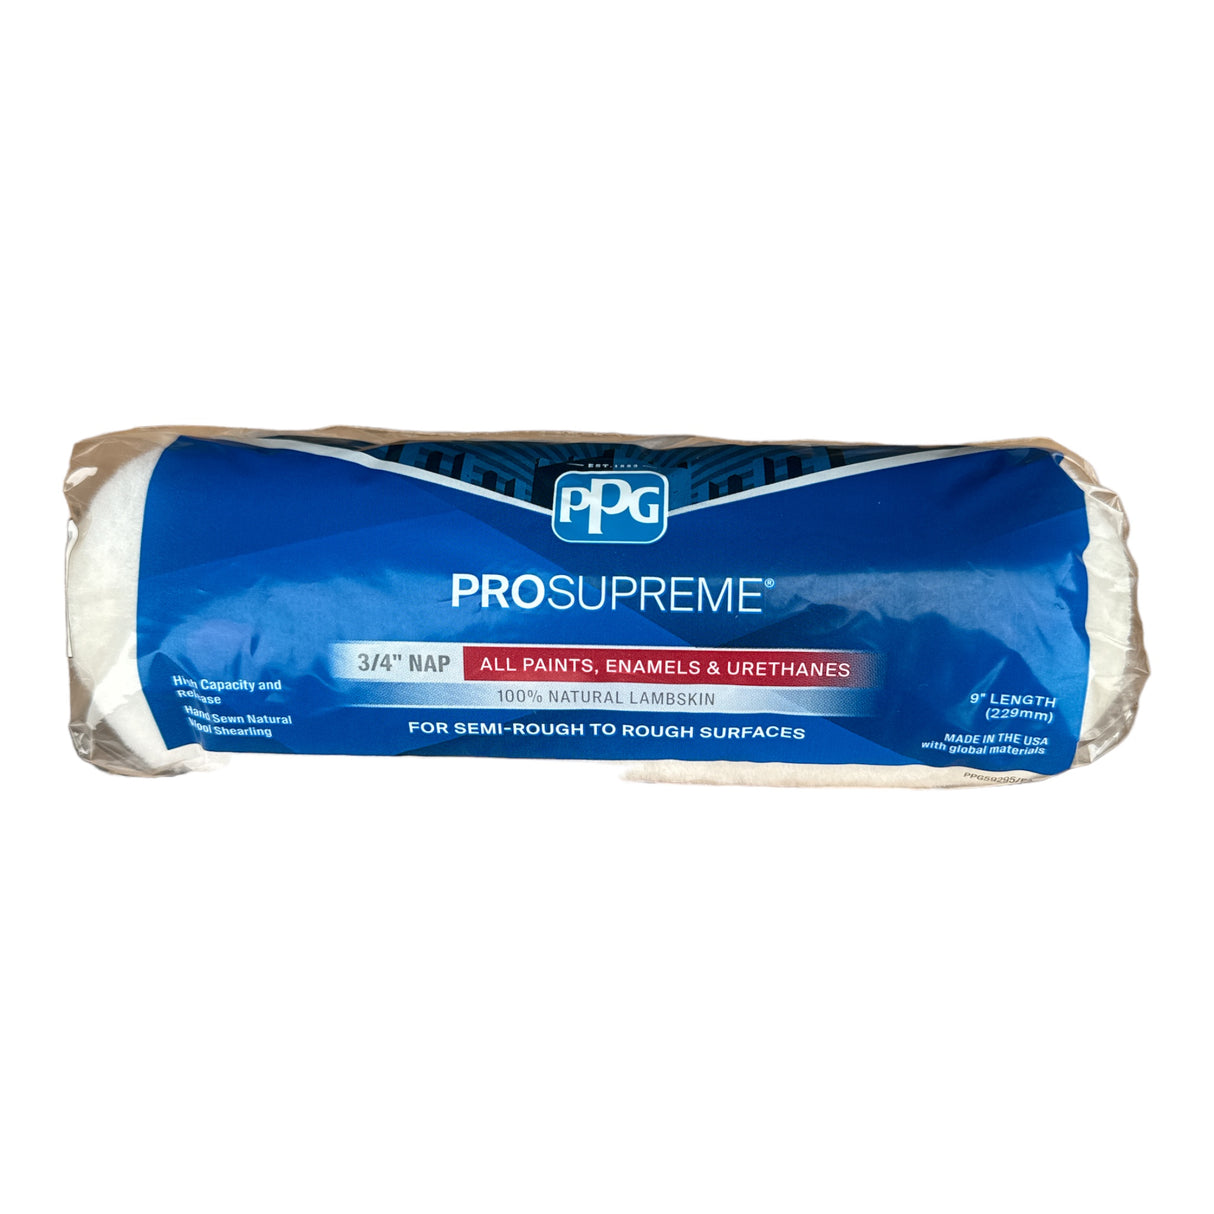 PPG® ProSupreme® Piel de cordero 3/4 pulg. NAP 9 x pulg. L (100 % piel de cordero natural)